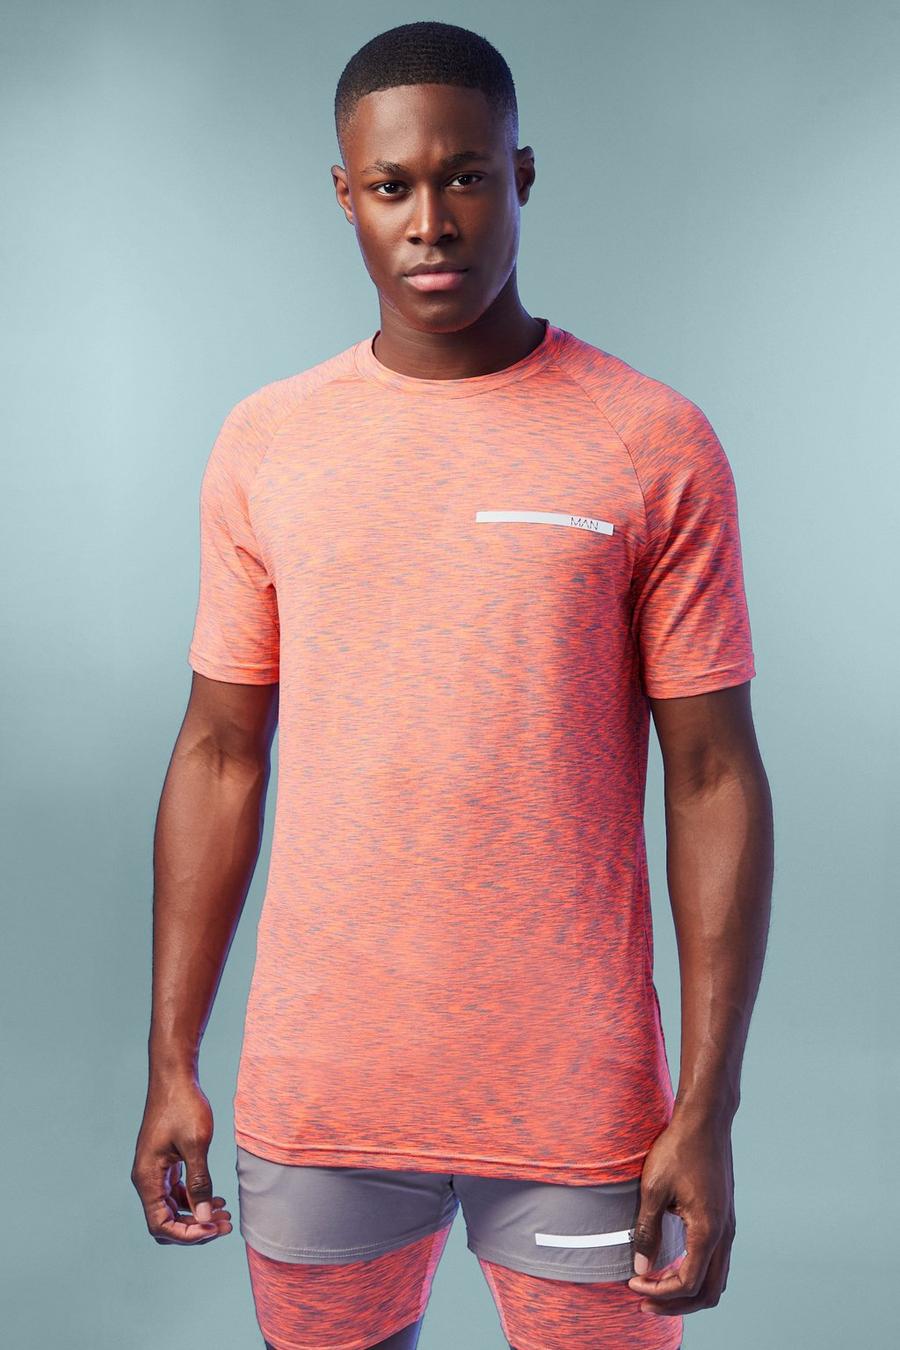 Man Active Performance T-Shirt, Orange